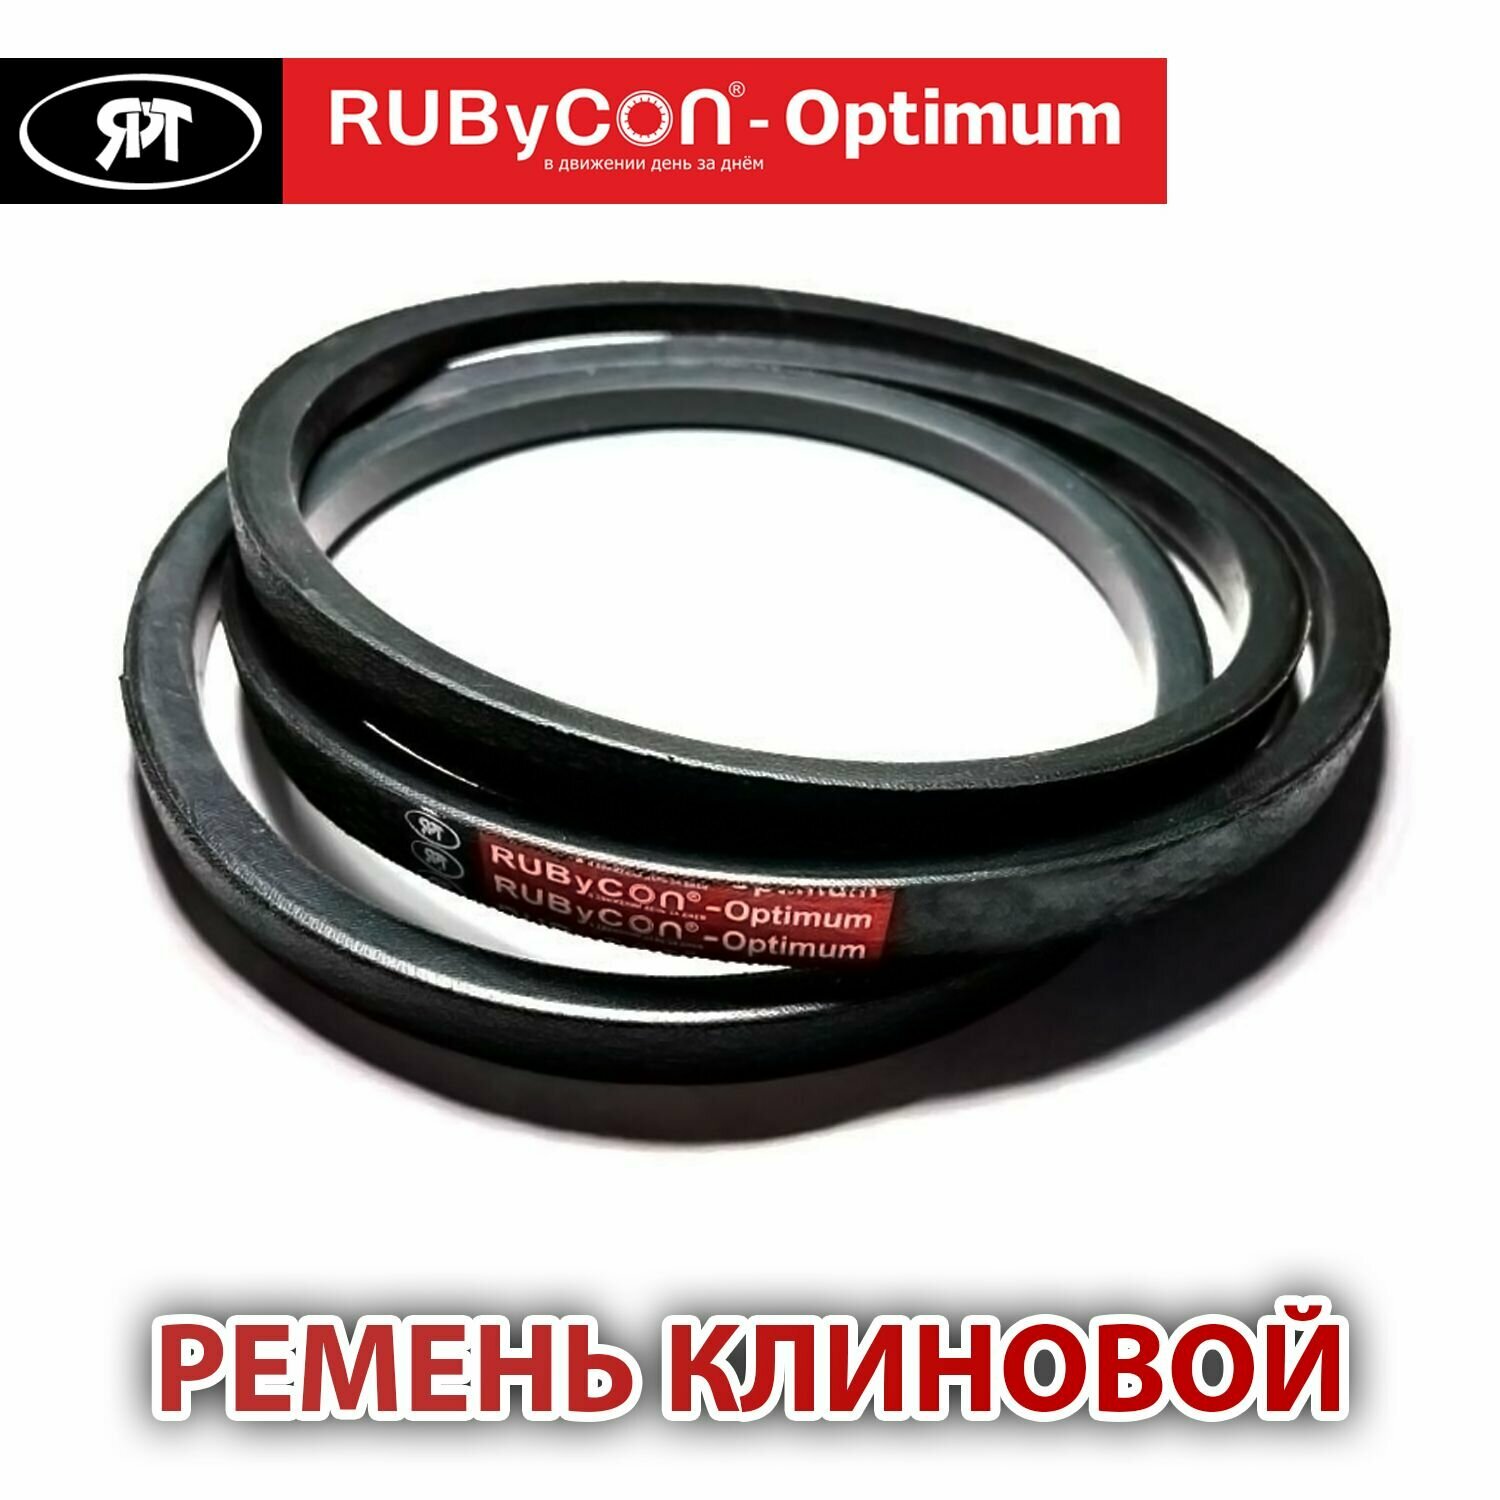 Ремень B(Б) - 1800 RUByCON Optimum Сделано в РФ. Ярославль